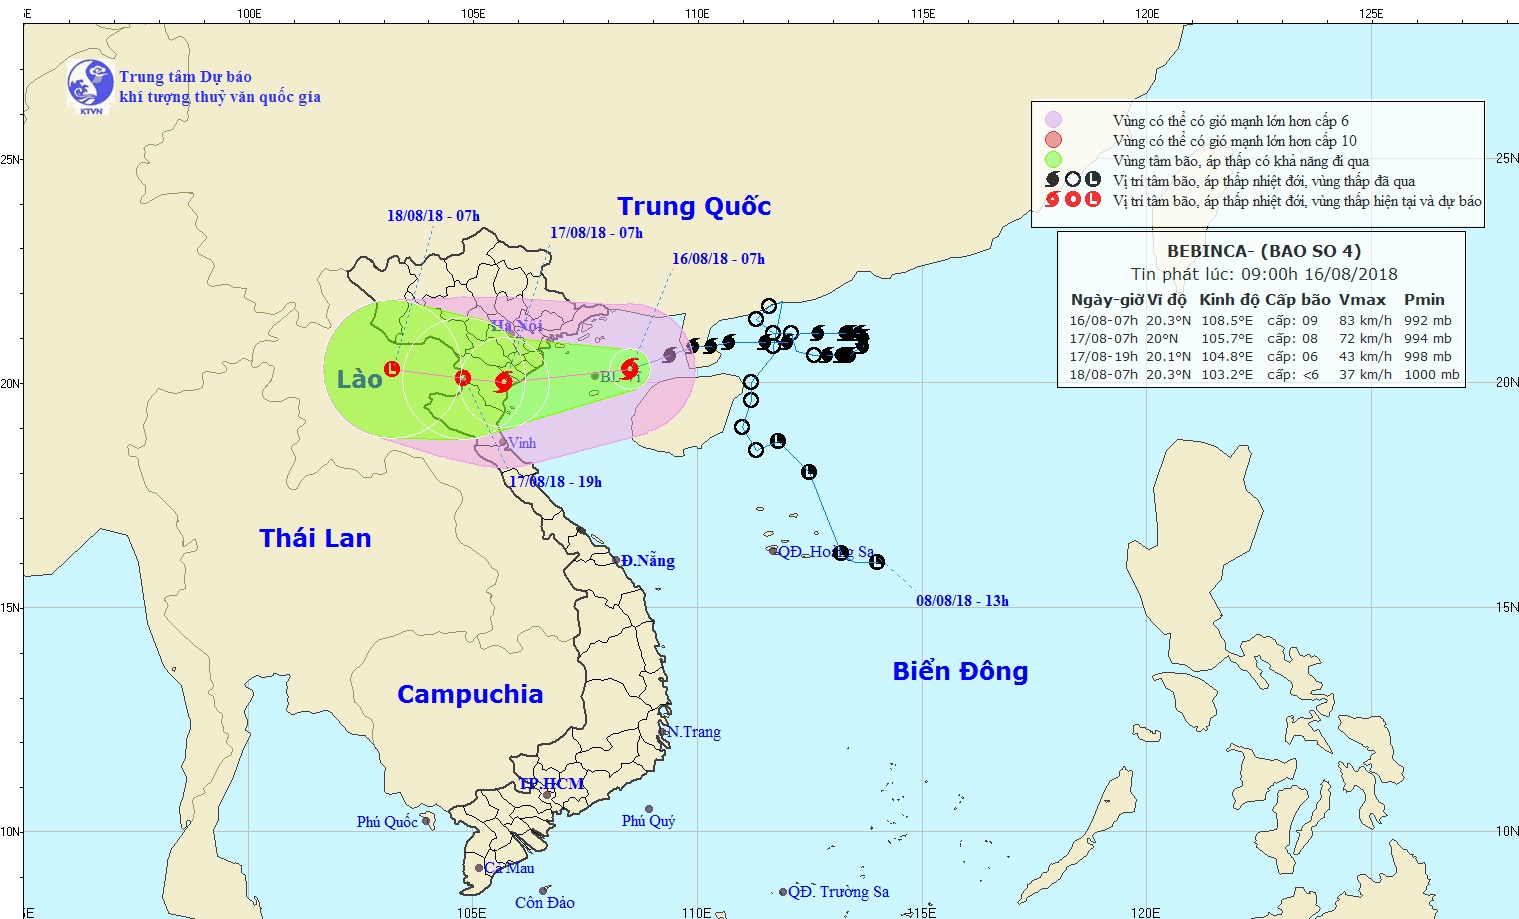 ​Storm Bebinca to bring rainfall, flooding to northern Vietnam this week